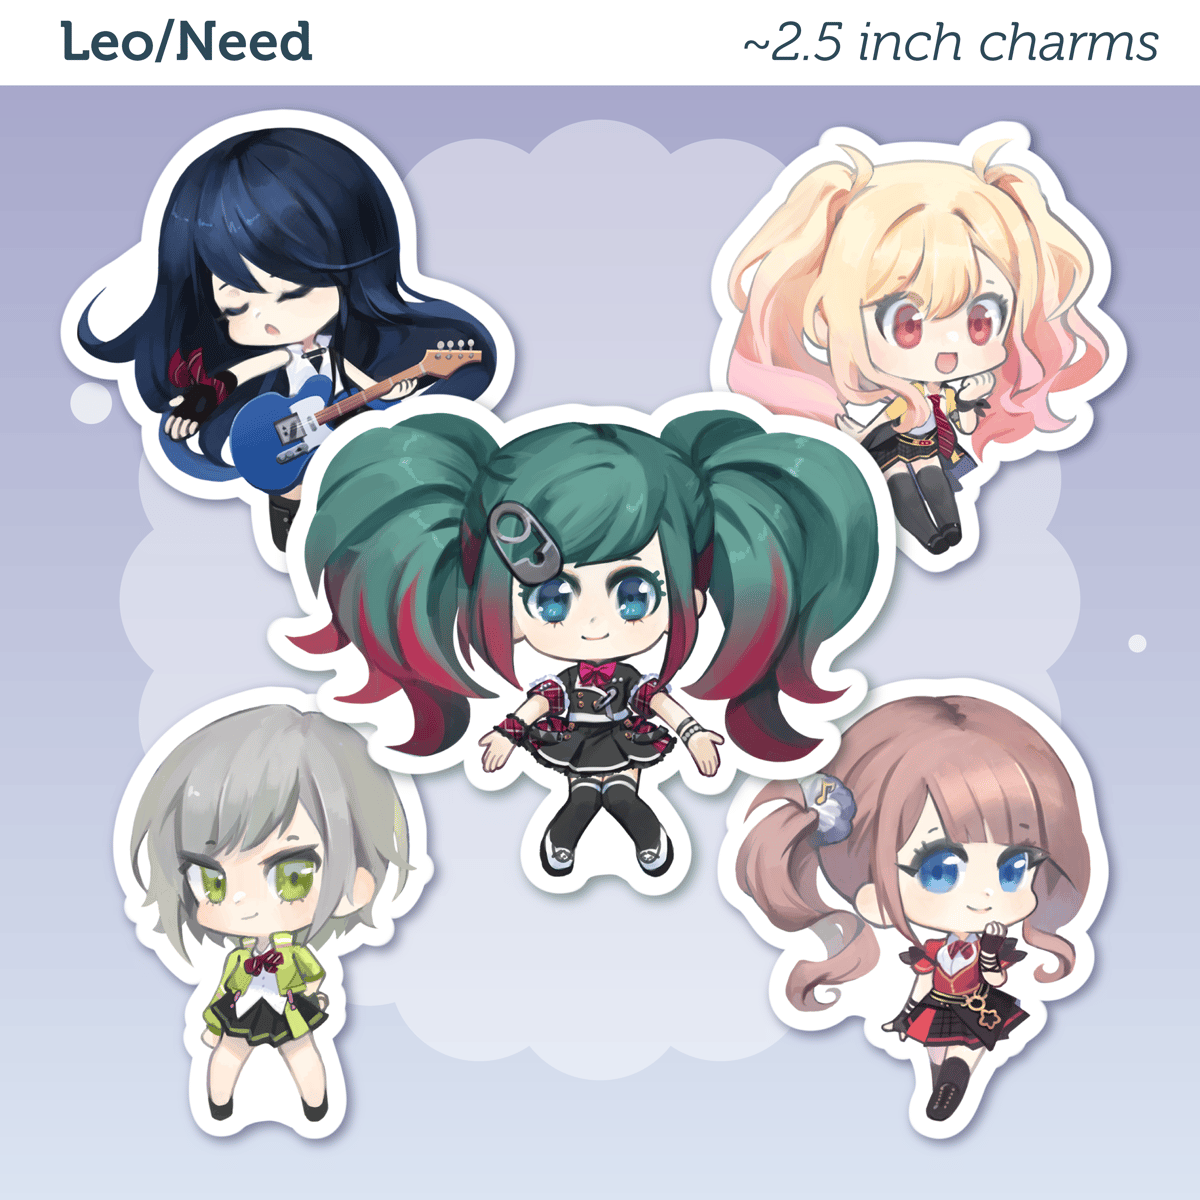 Image of Leo/Need 2.5" charms